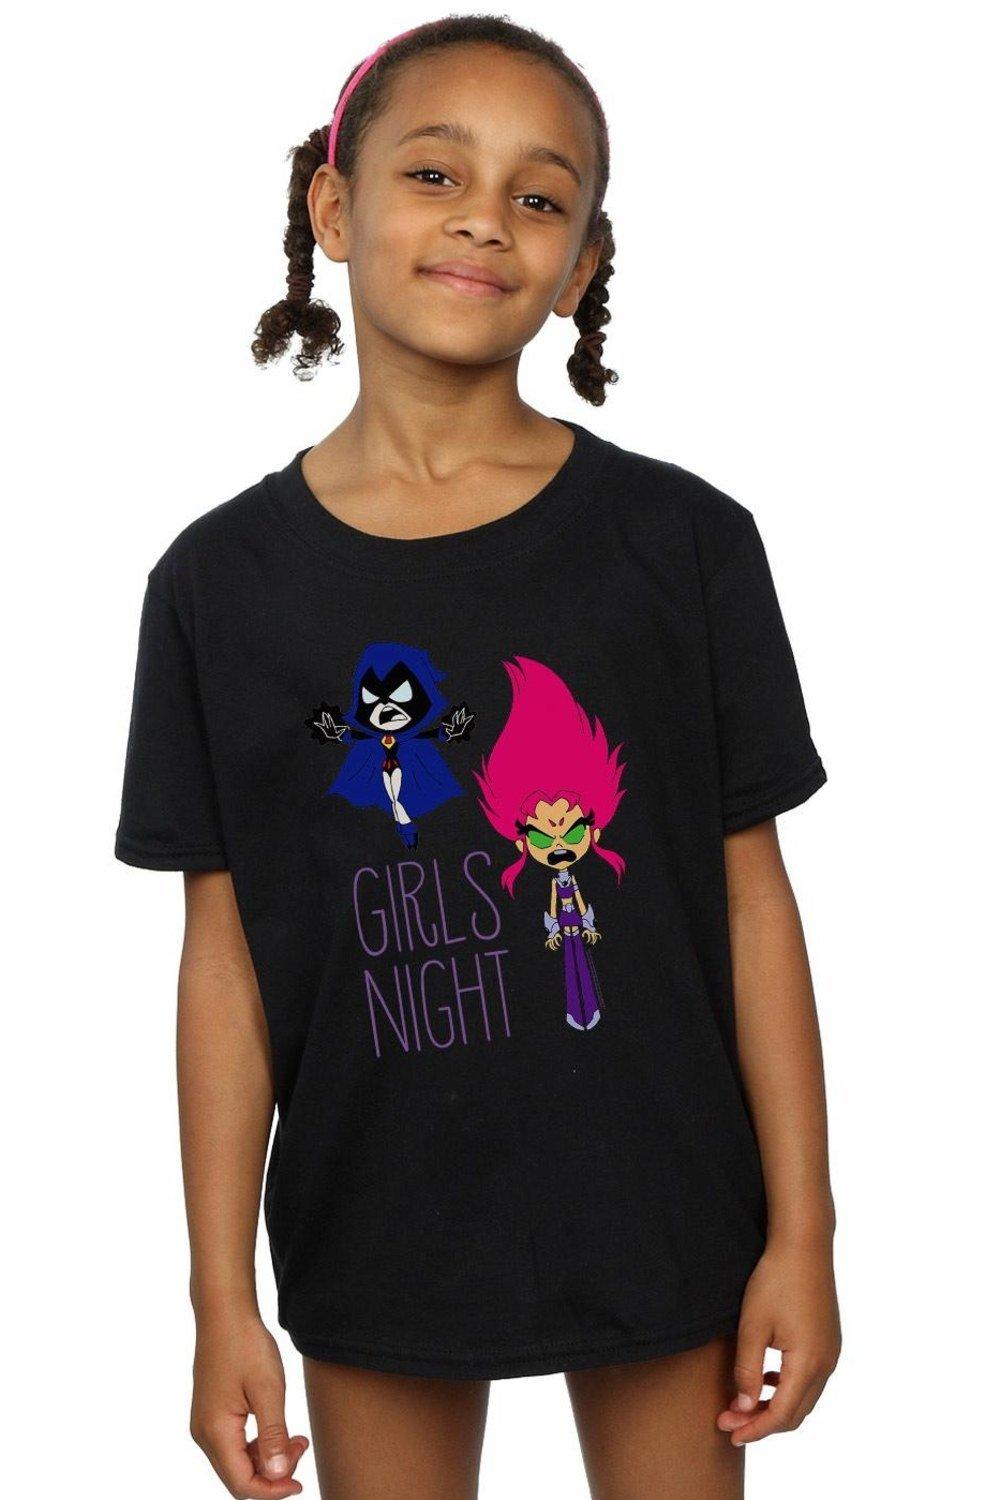 Teen Titans Go Night Cotton T-Shirt